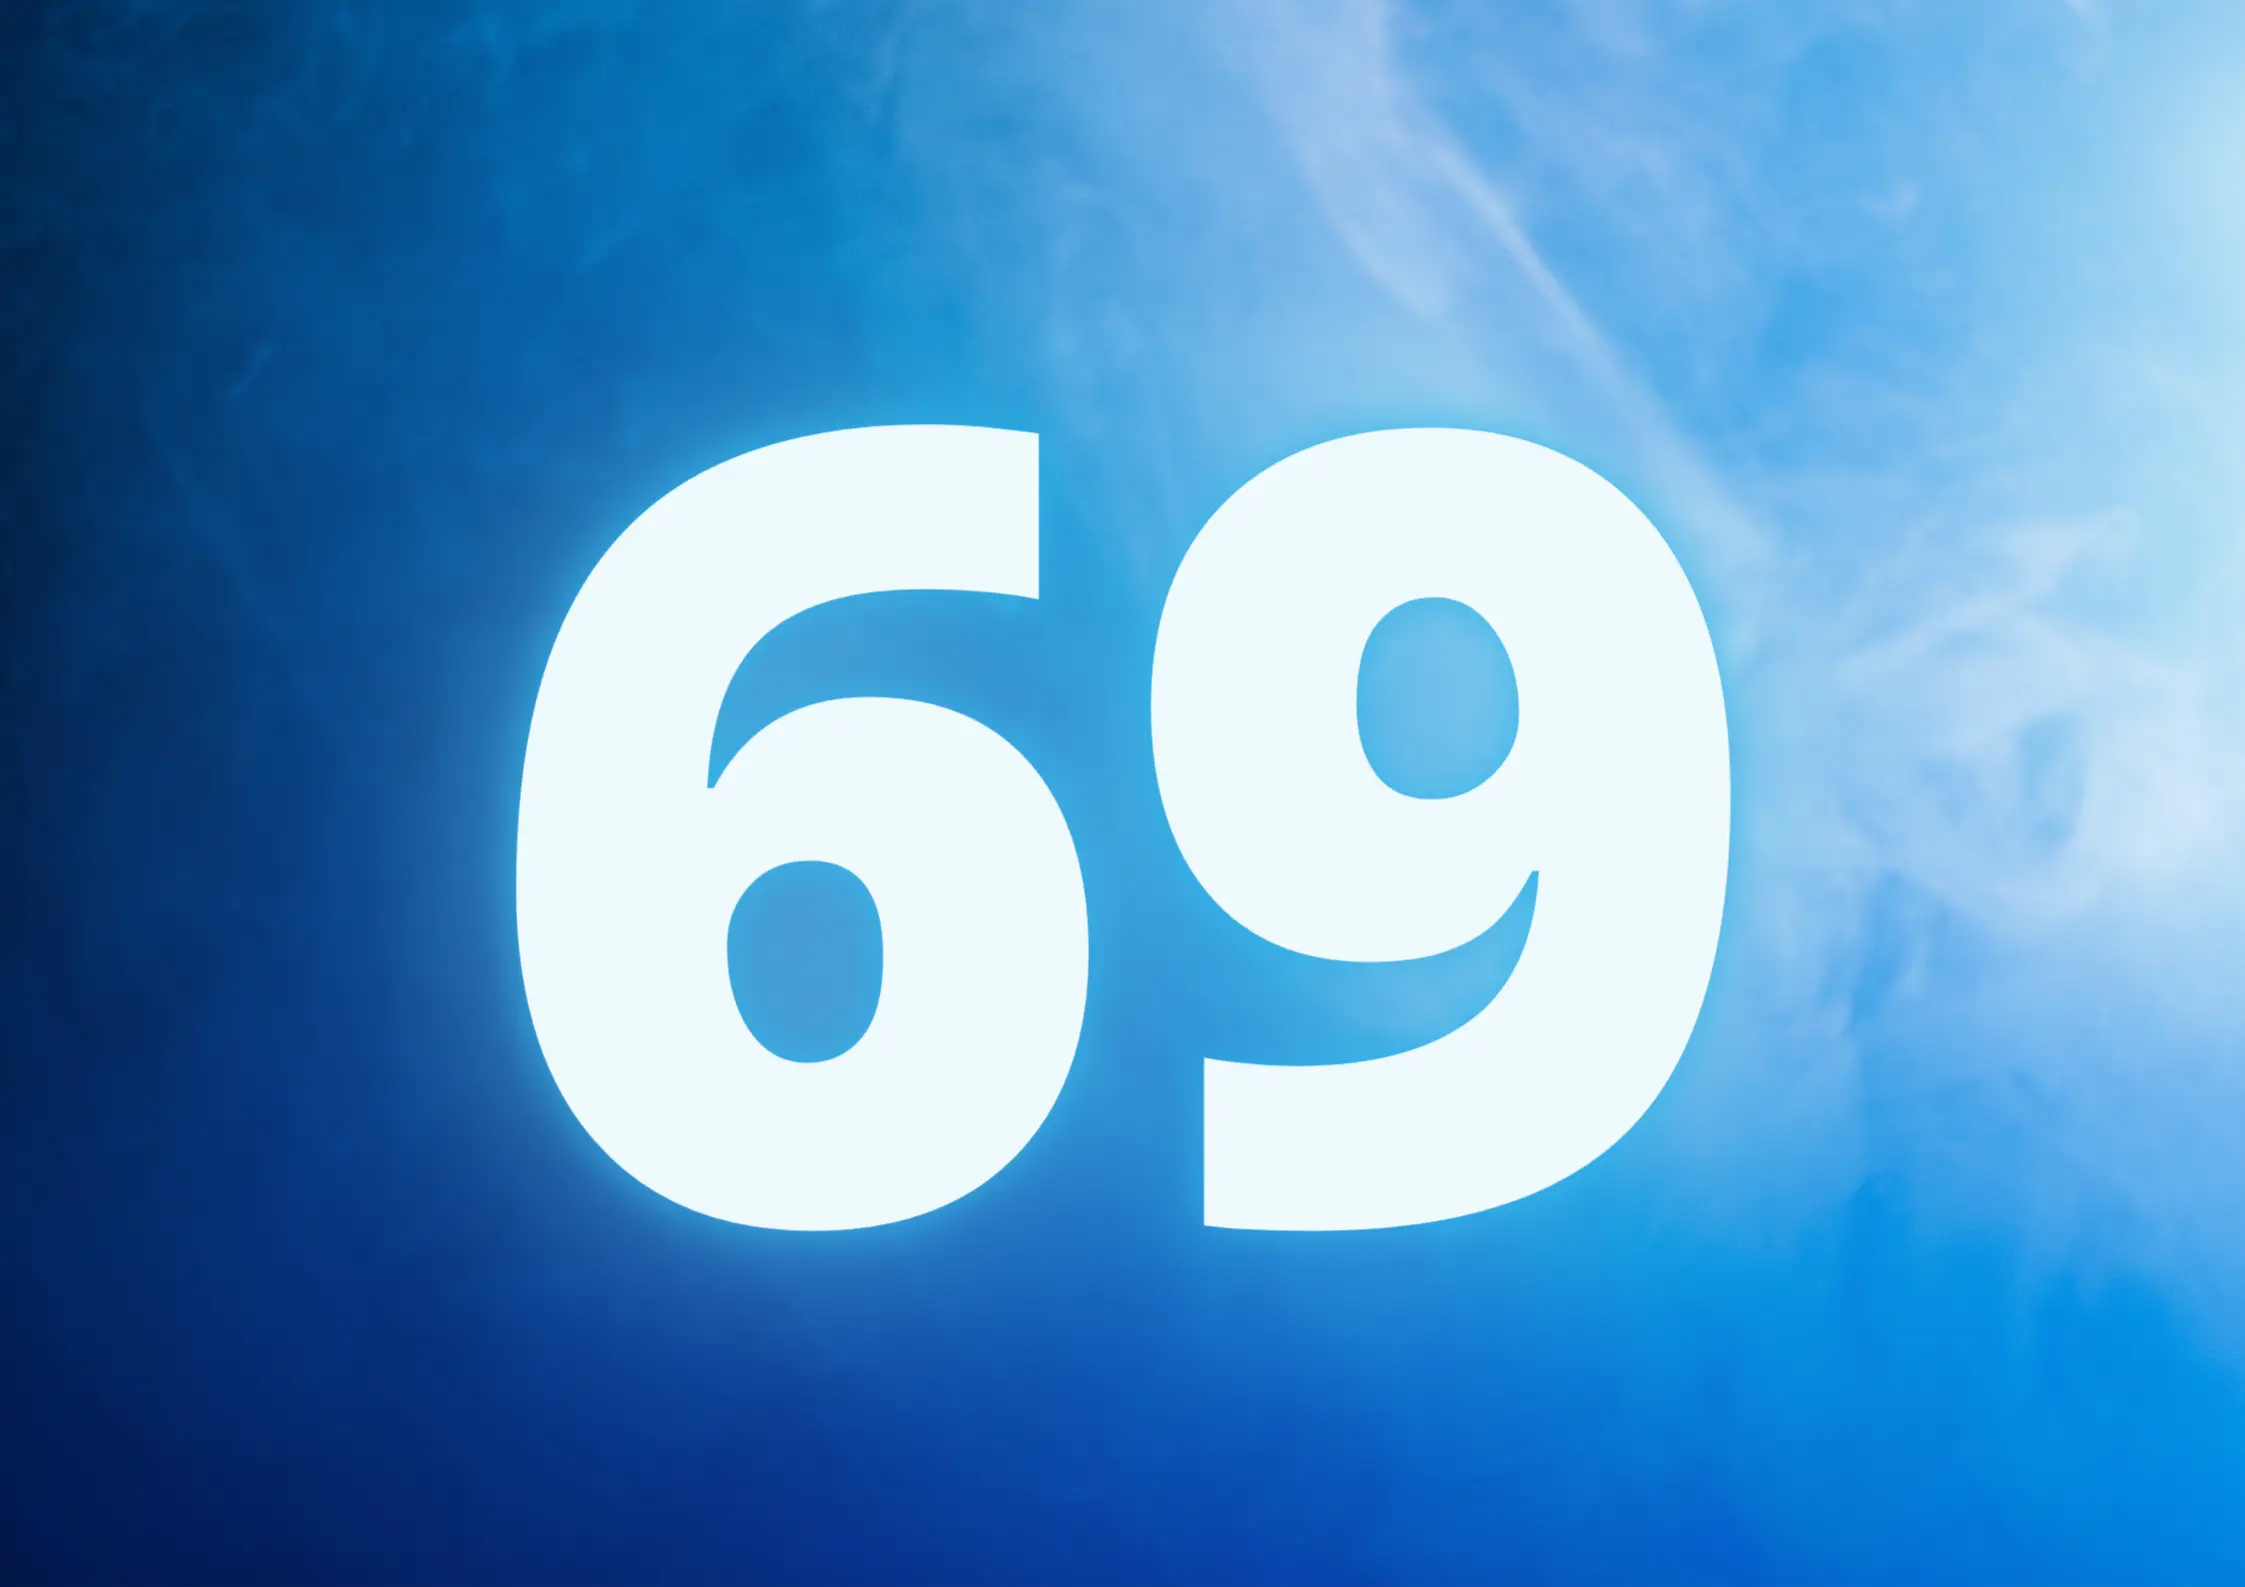 69 Number written on Blue texture